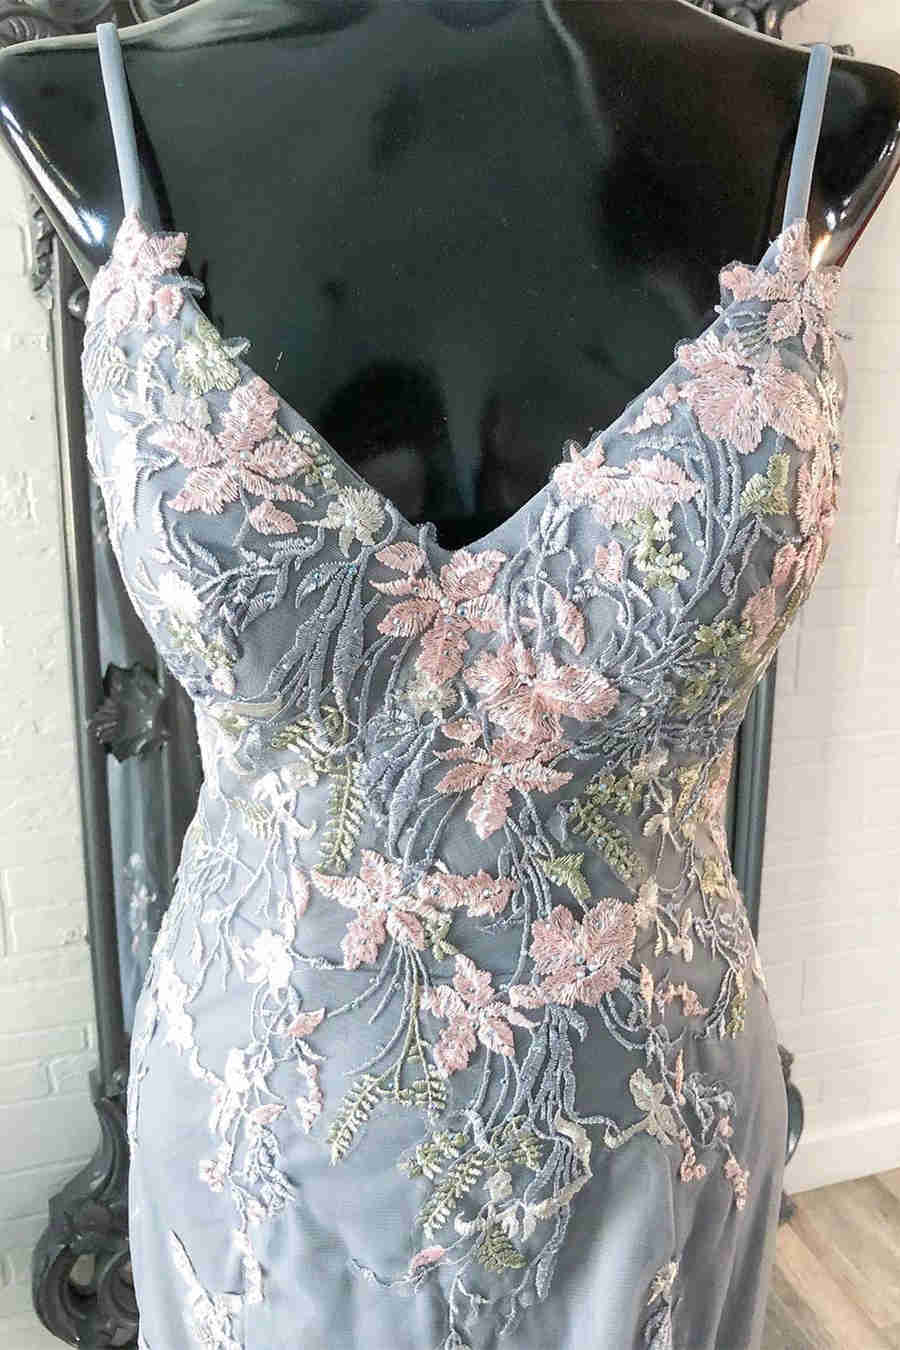 Elegant Mermaid Grey Prom Dress with Embroidery gh2653